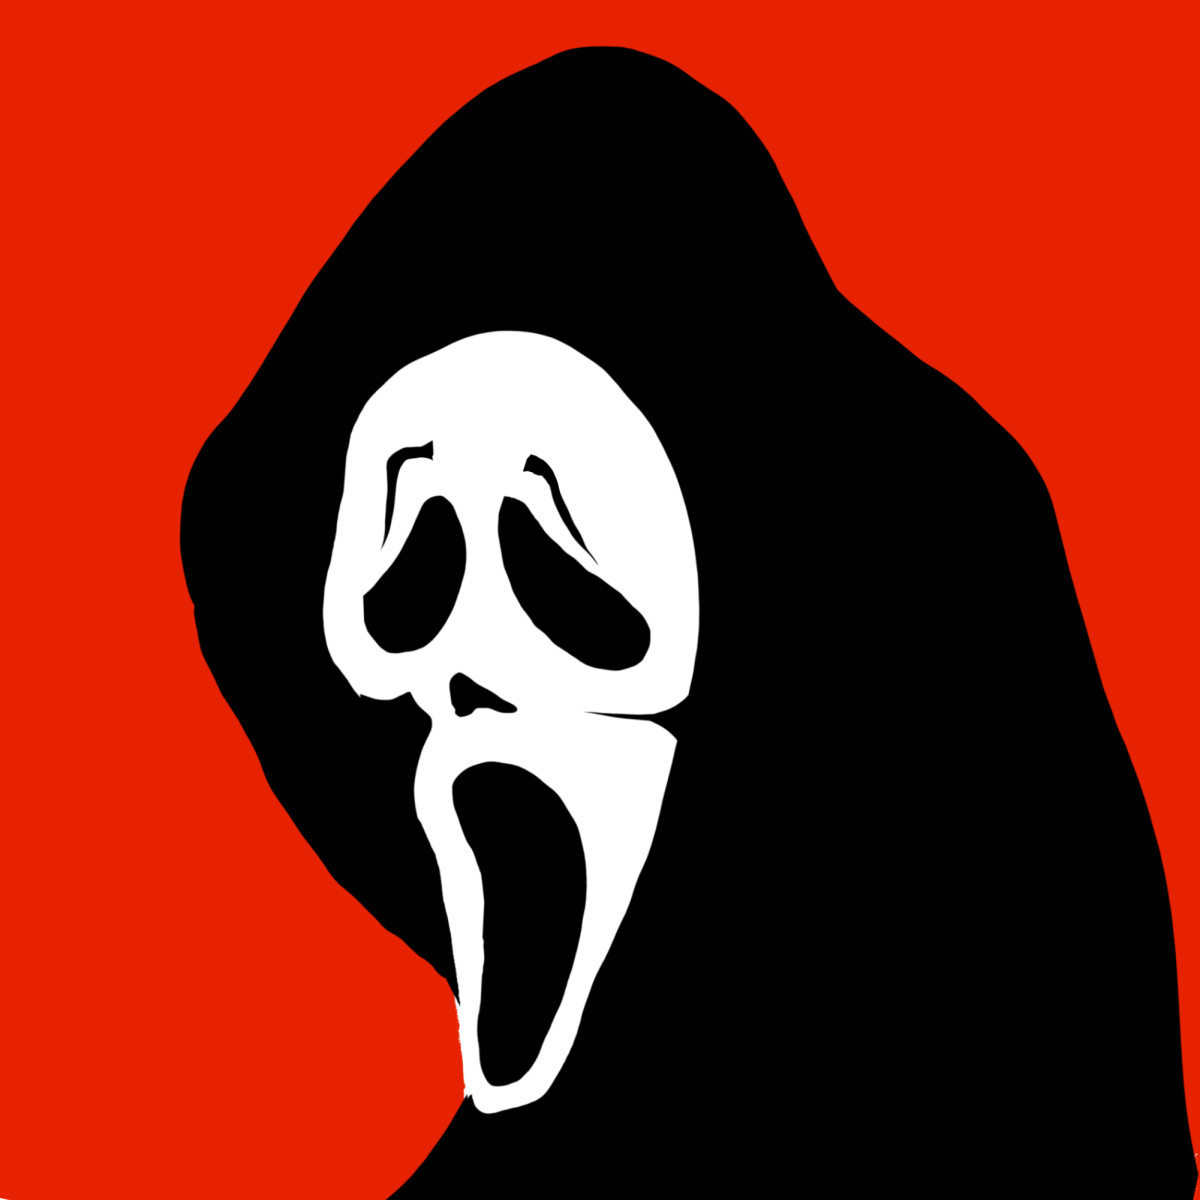 Retro Review: ‘Scream’ (1996) mocks and embraces the classic slasher tropes